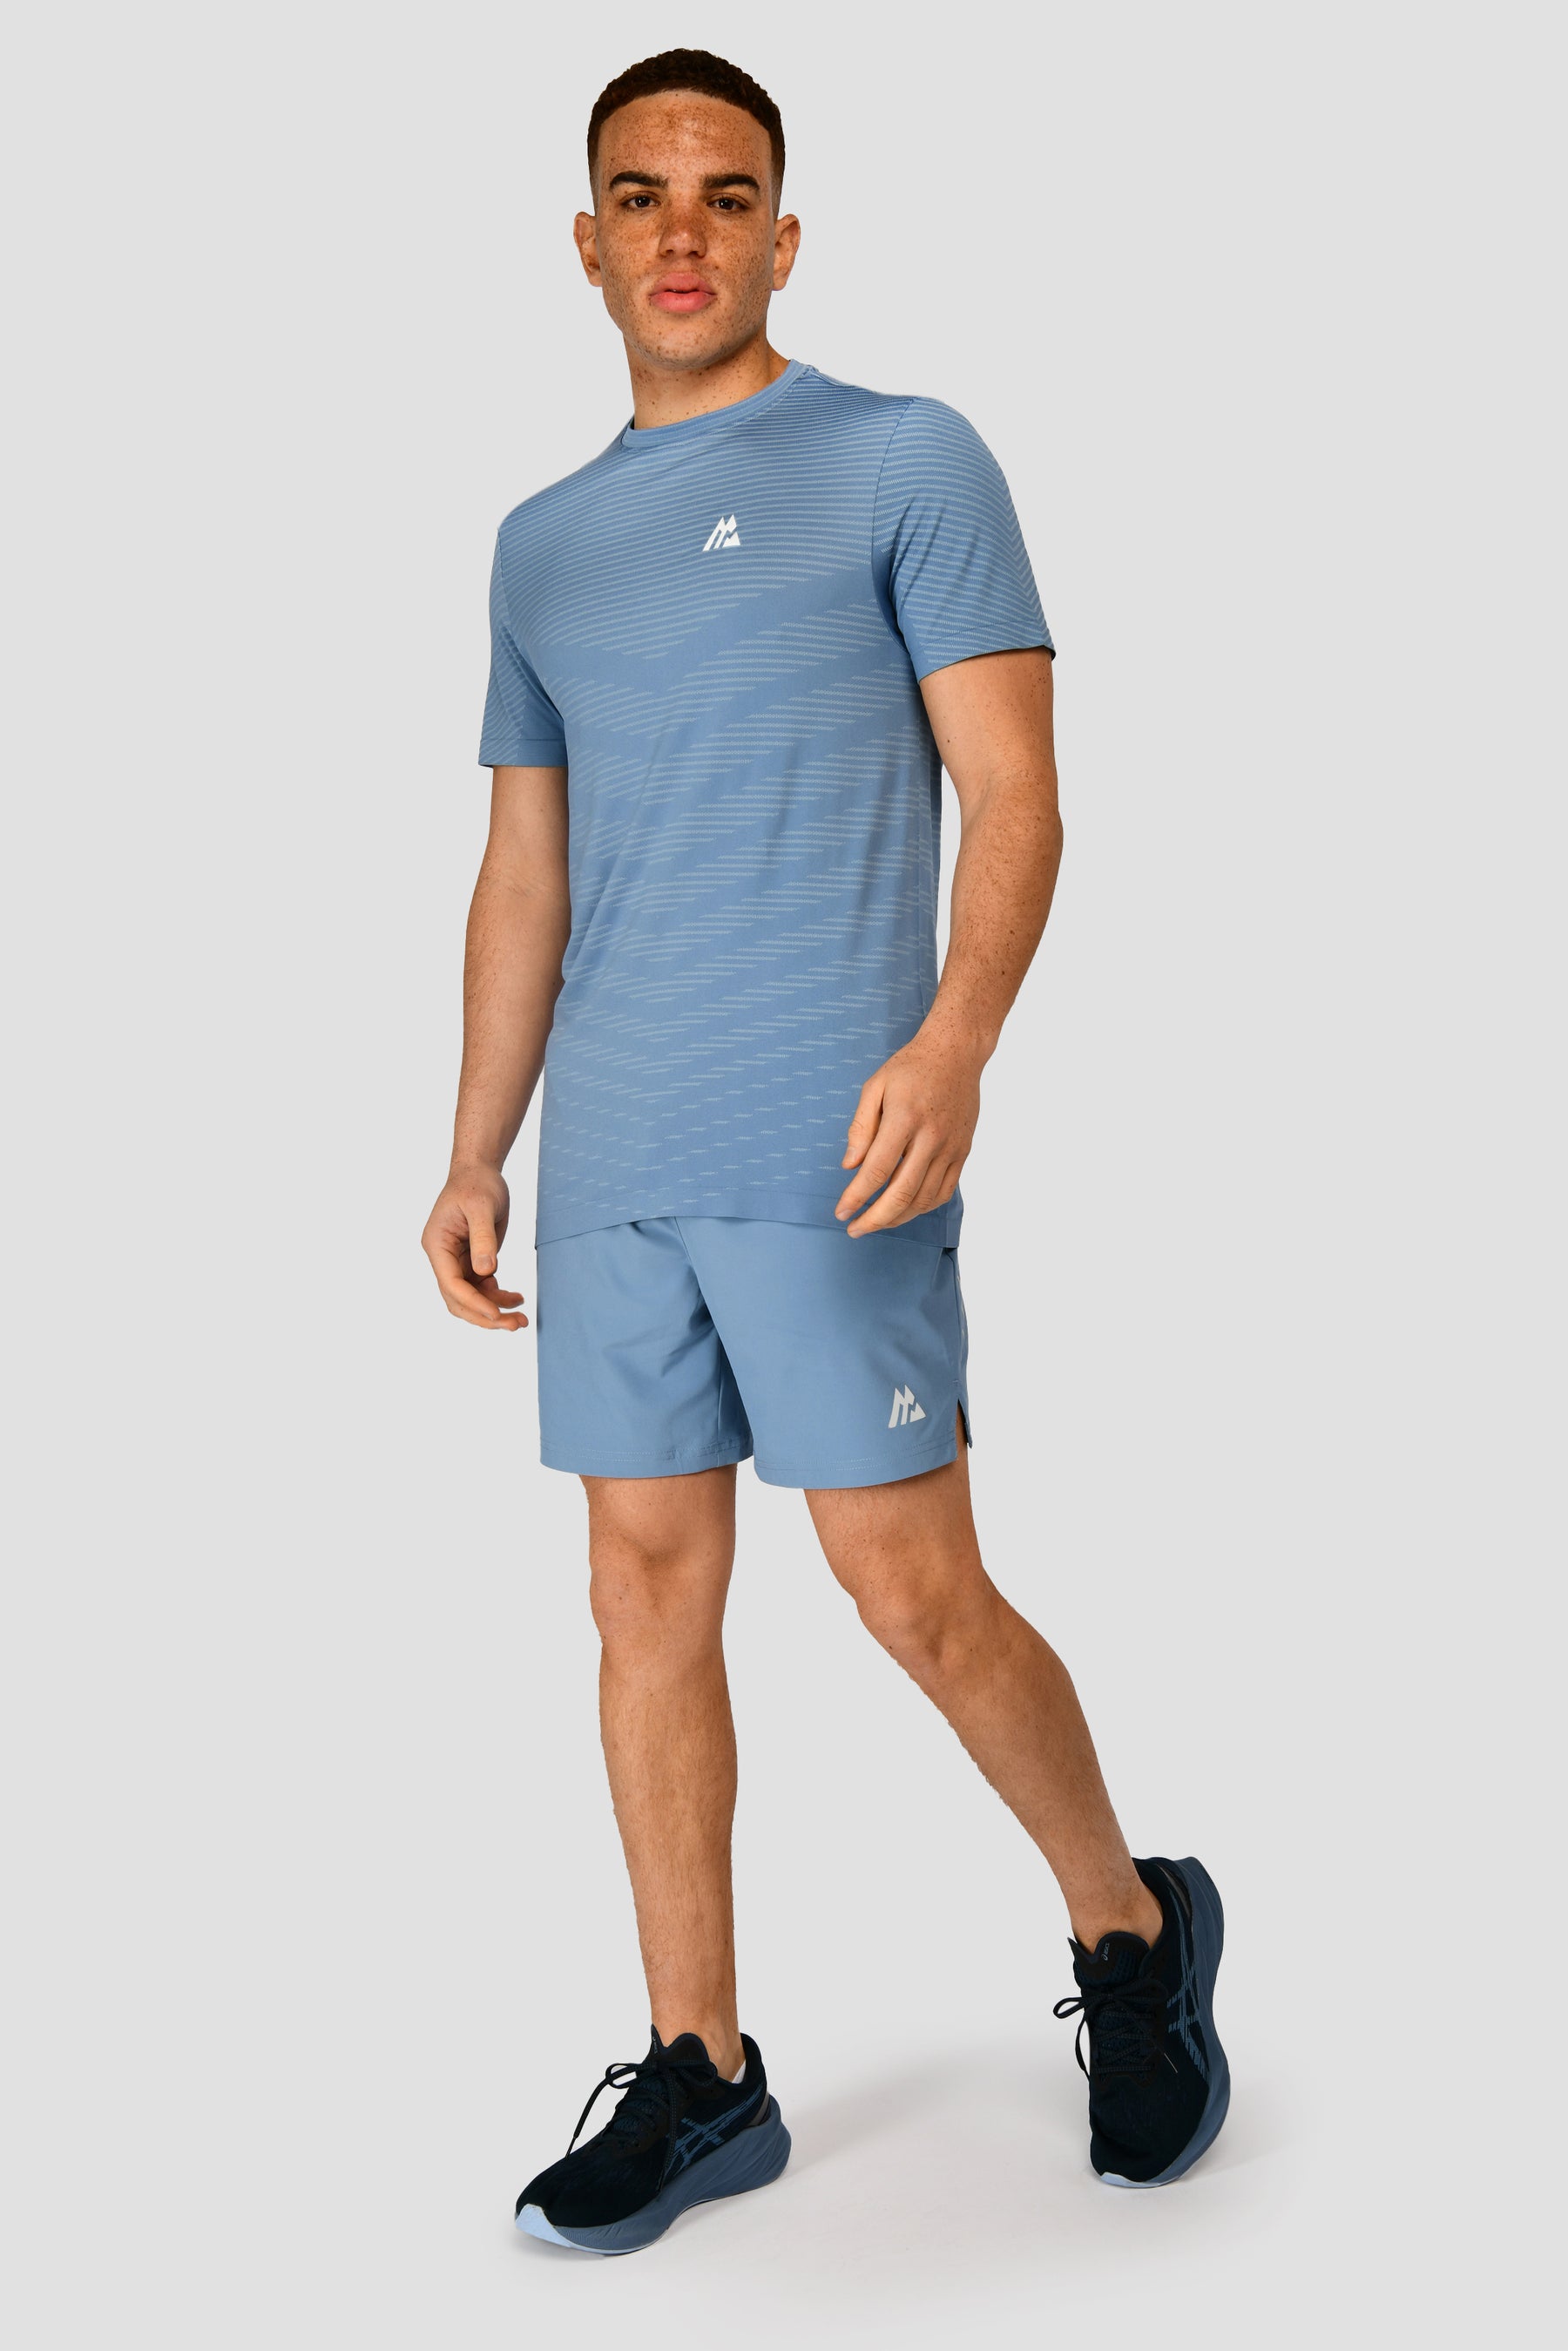 Men's Speed Seamless T-Shirt - Steel Blue/Moonstone